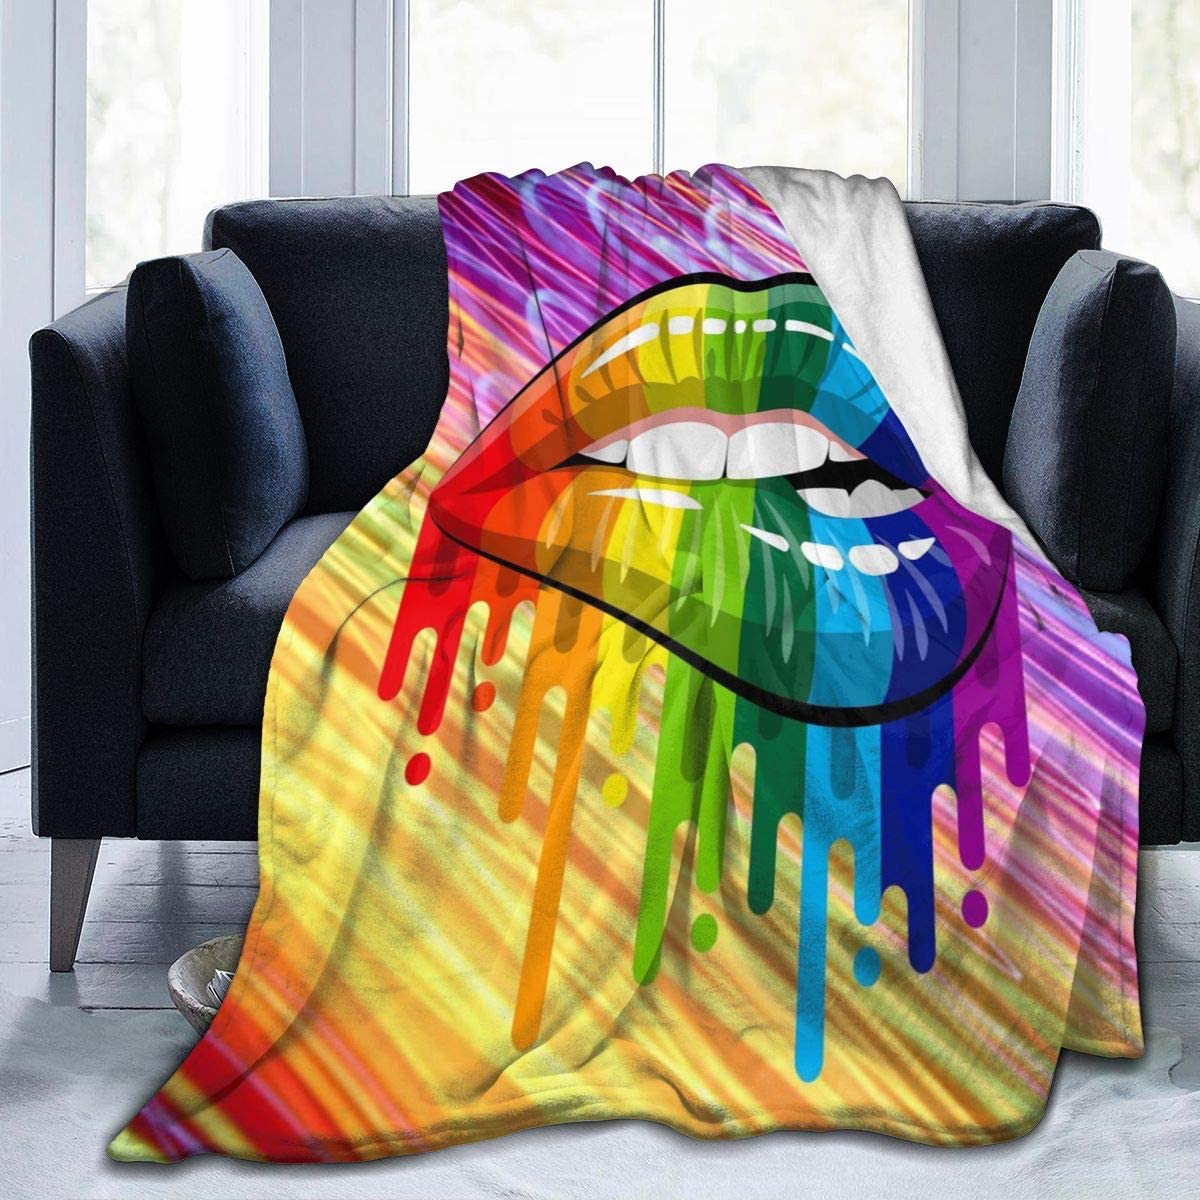 Blanket For Gay Homosexual/ Lesbian Rainbow Lips Pride Fleece Blanket/ Lgbt Meaningful Gift